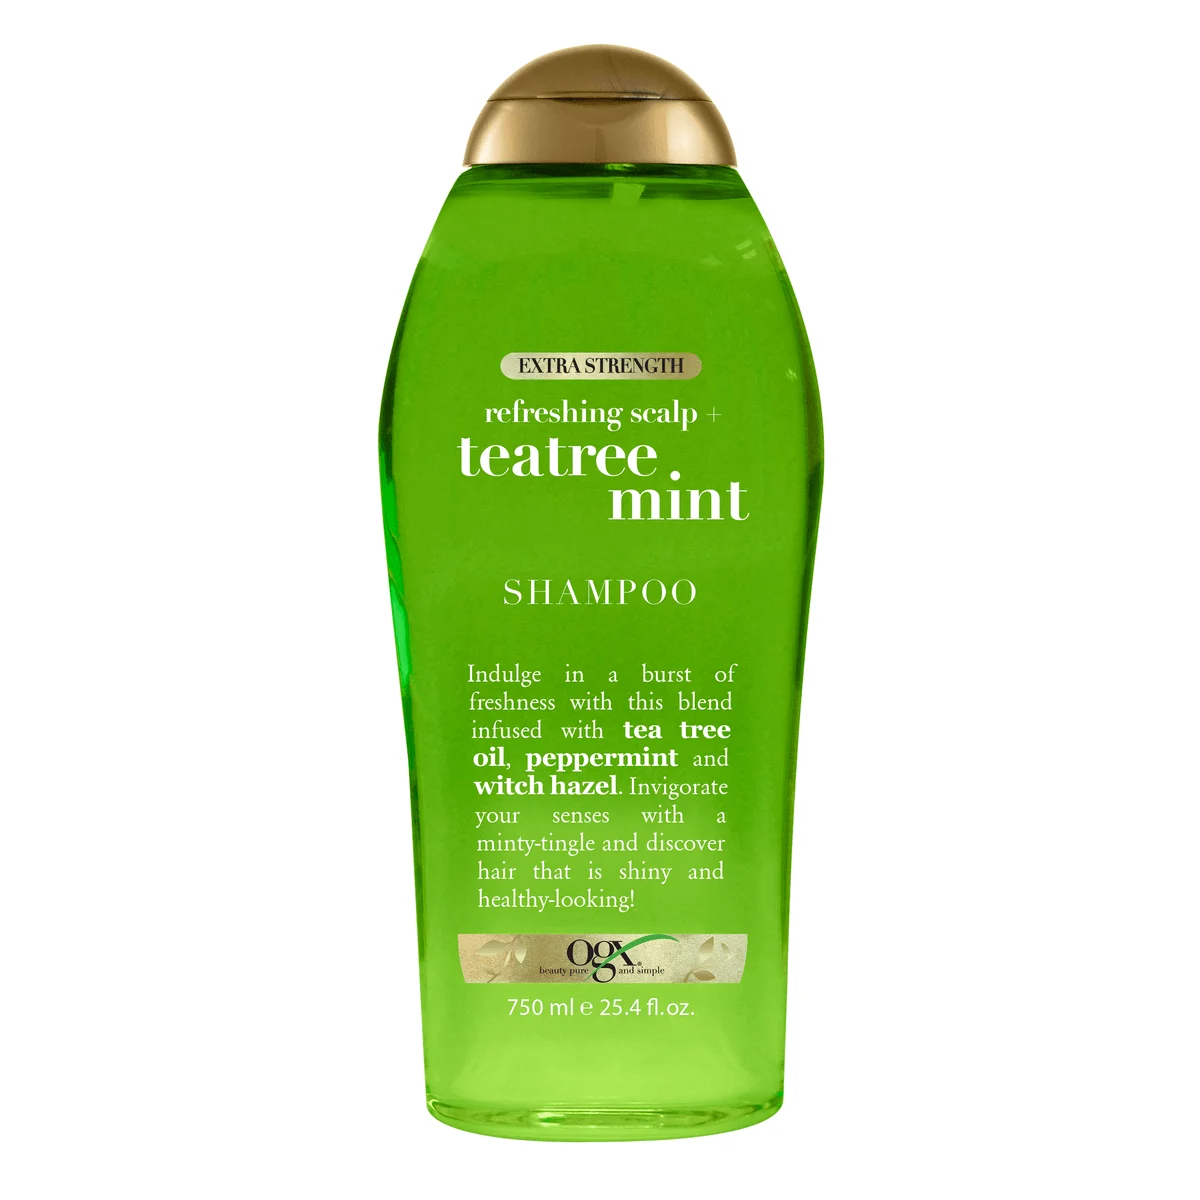 Extra Strength Refreshing Scalp + Teatree Mint Salon Size Shampoo 25.4 fl oz (1)